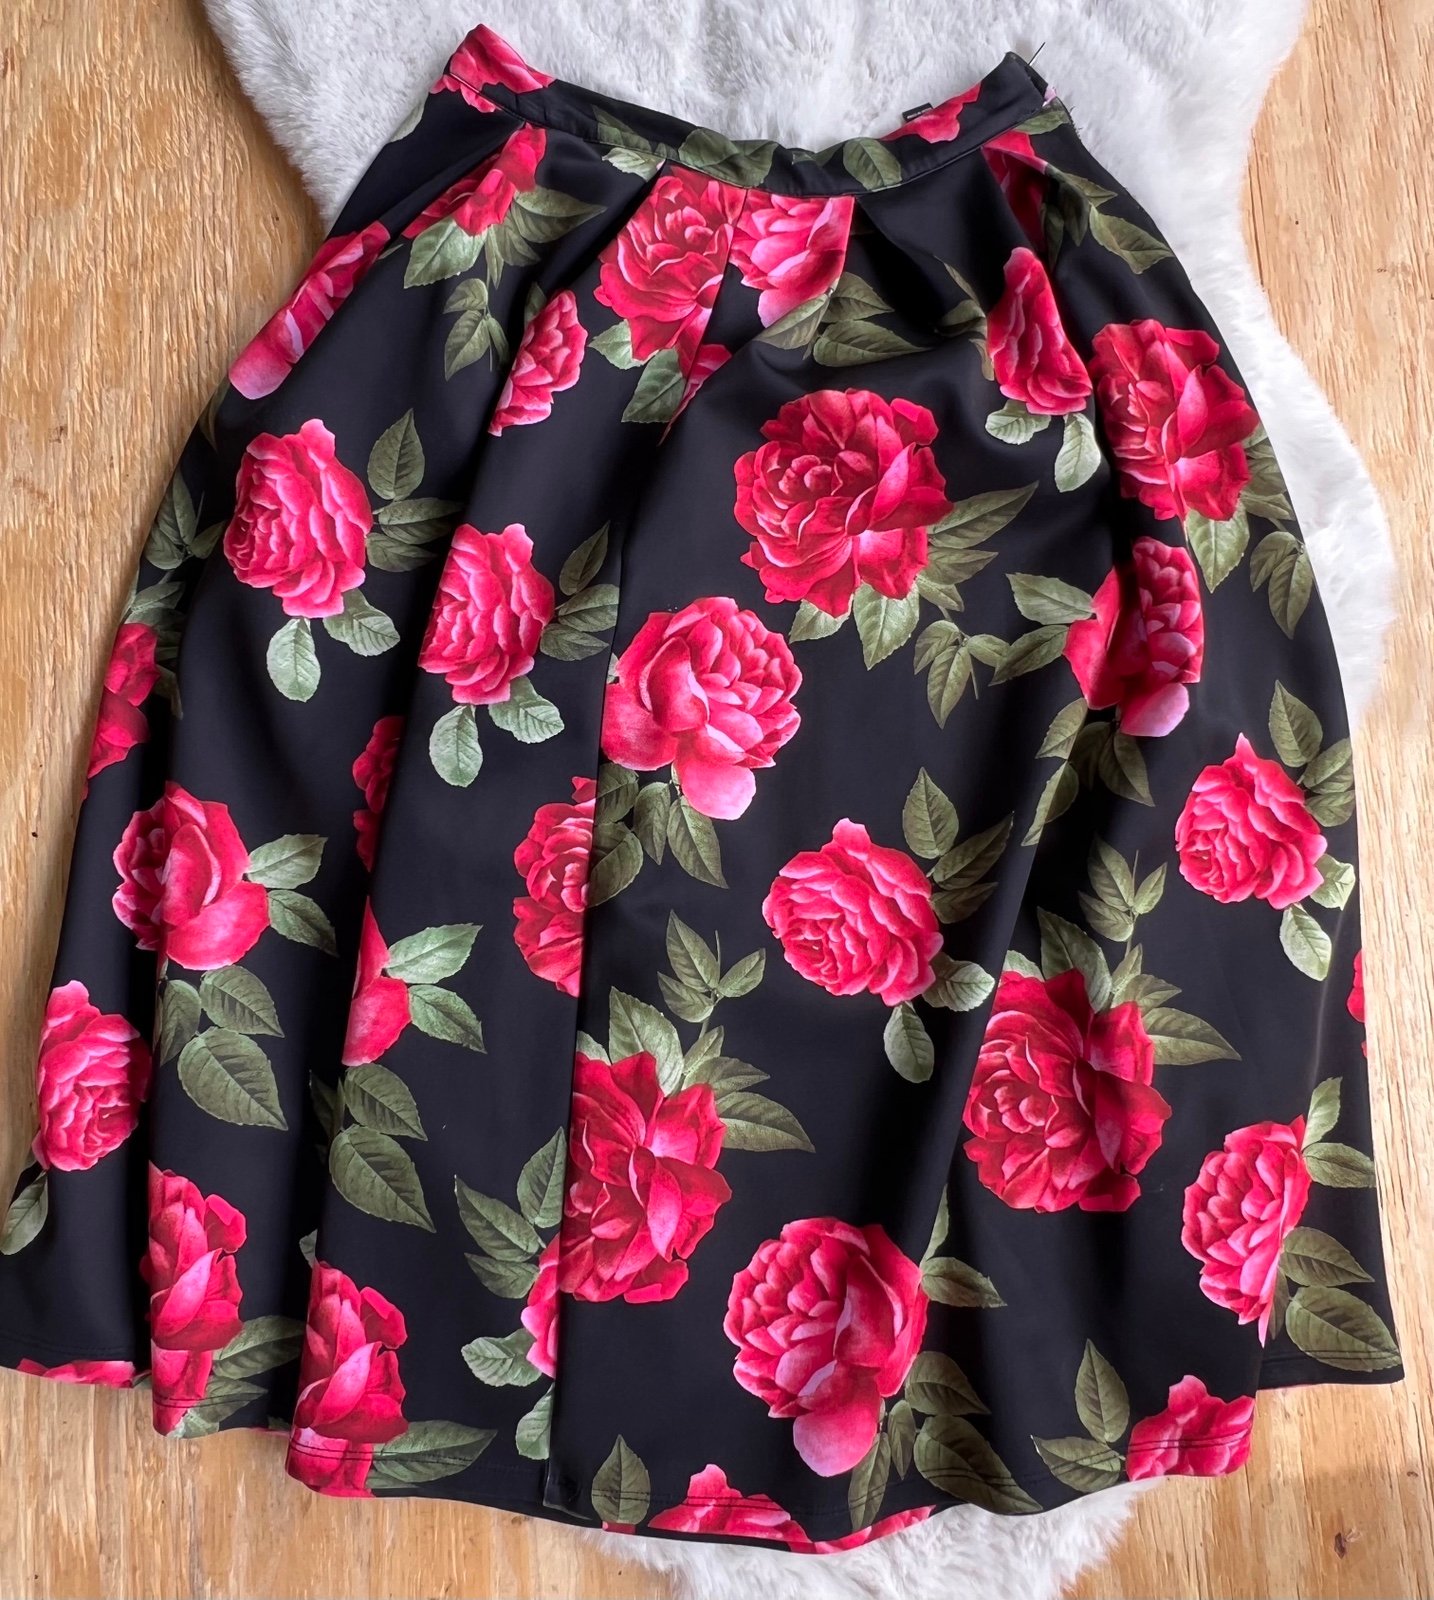 Beautiful Red floral black skirt forever 21 Nh3TdGD5z o